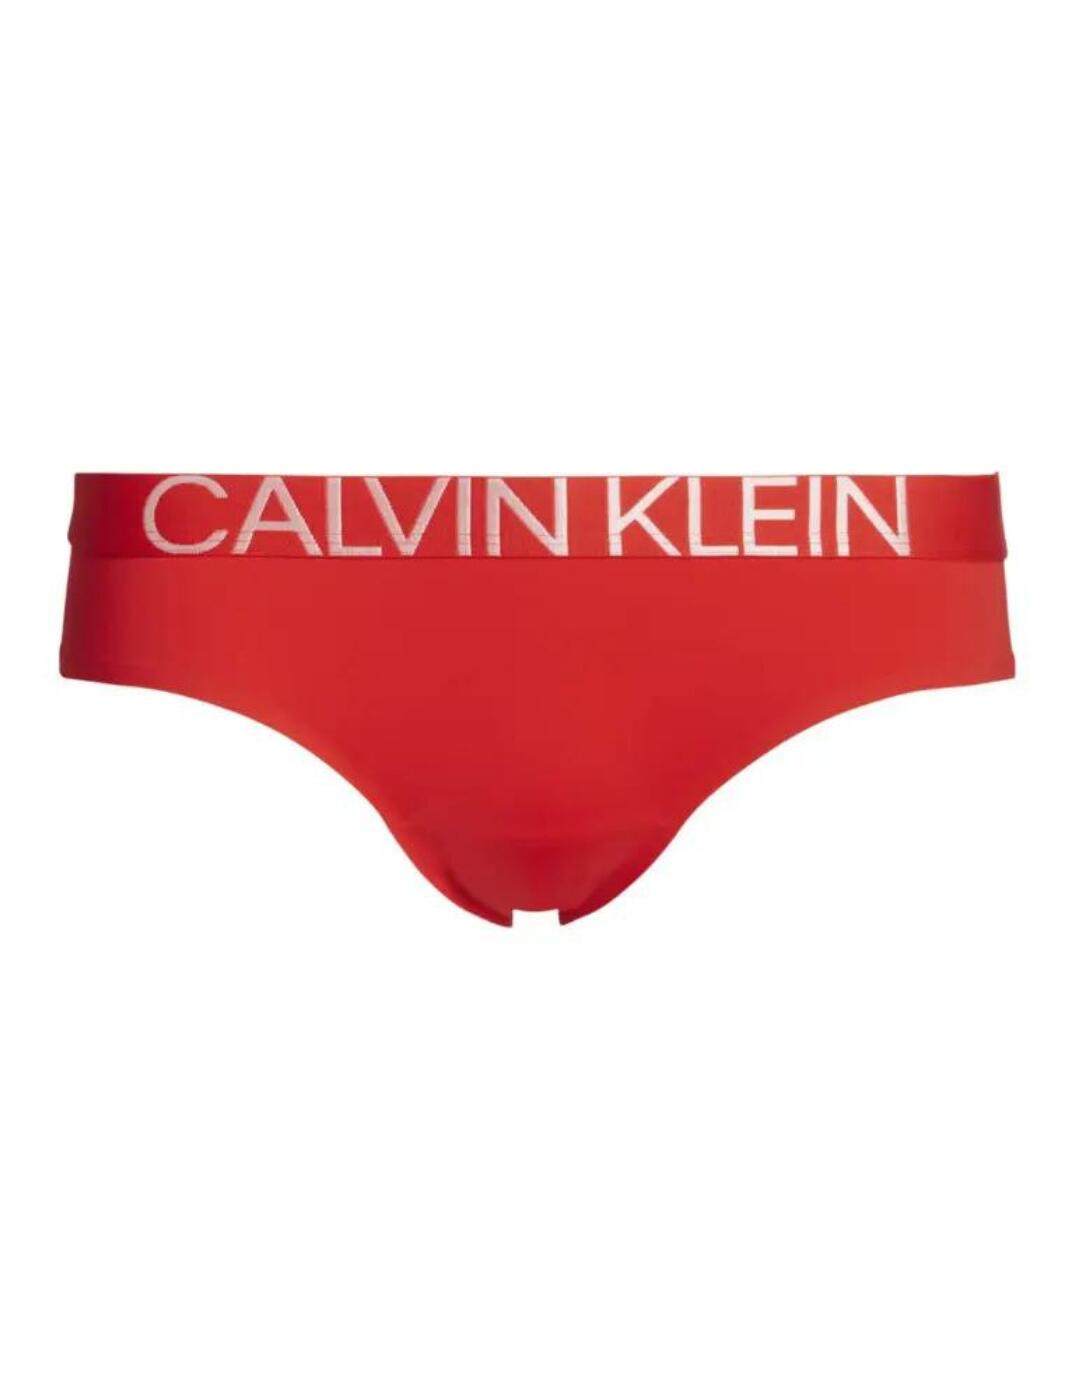  Calvin Klein 1981 Bikini Style Brief Fever Dream